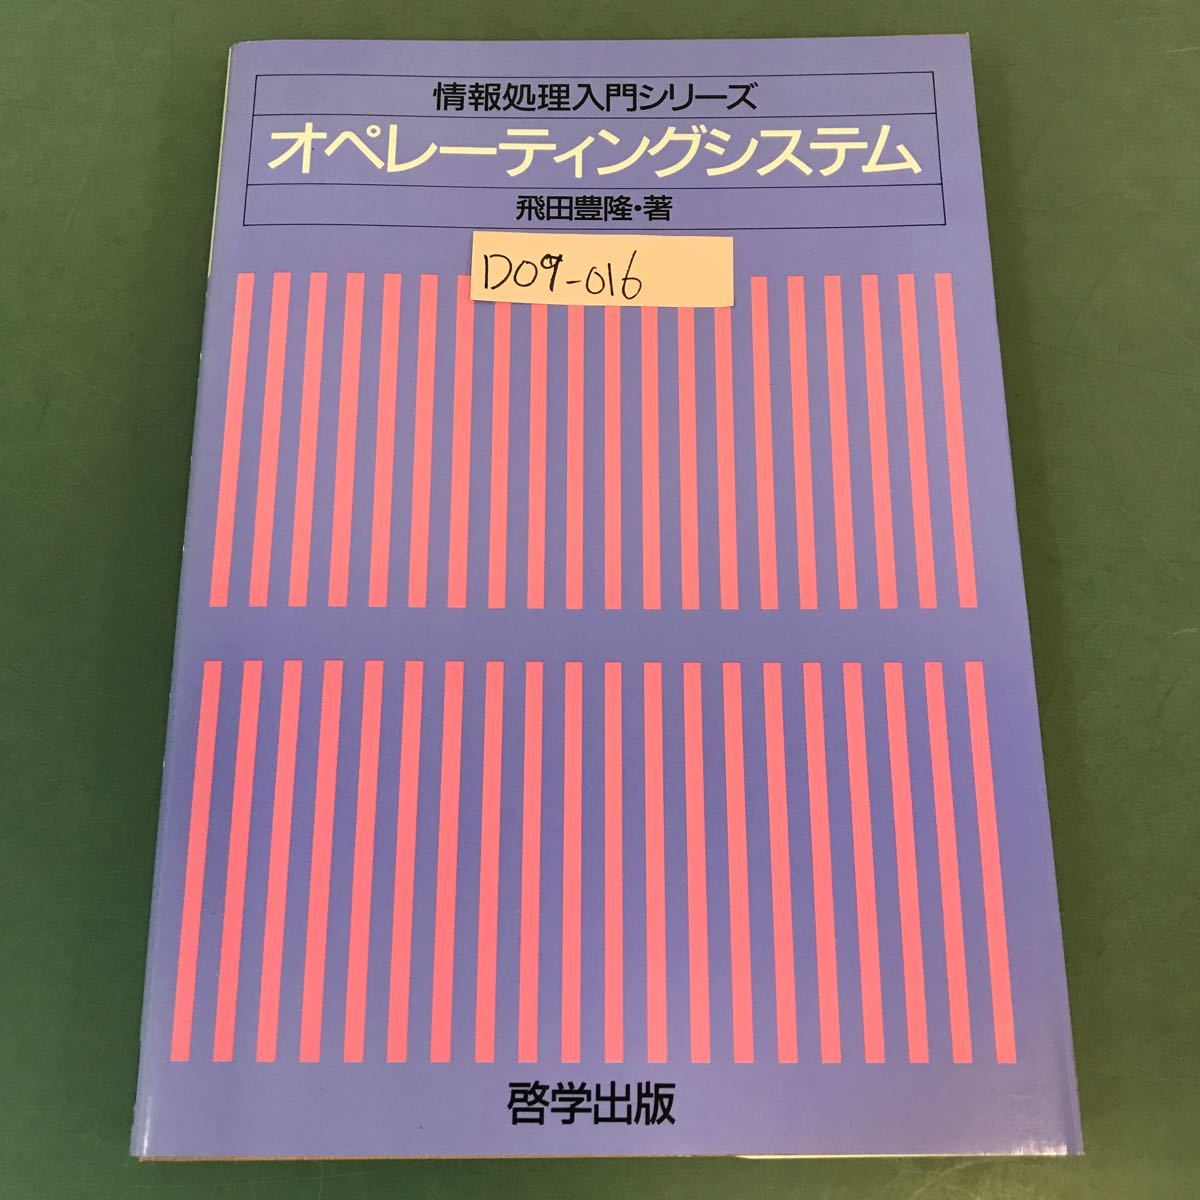 D09-016 情報処理入門シリーズ オペレーティングシステム 飛田豊隆・著 啓学出版